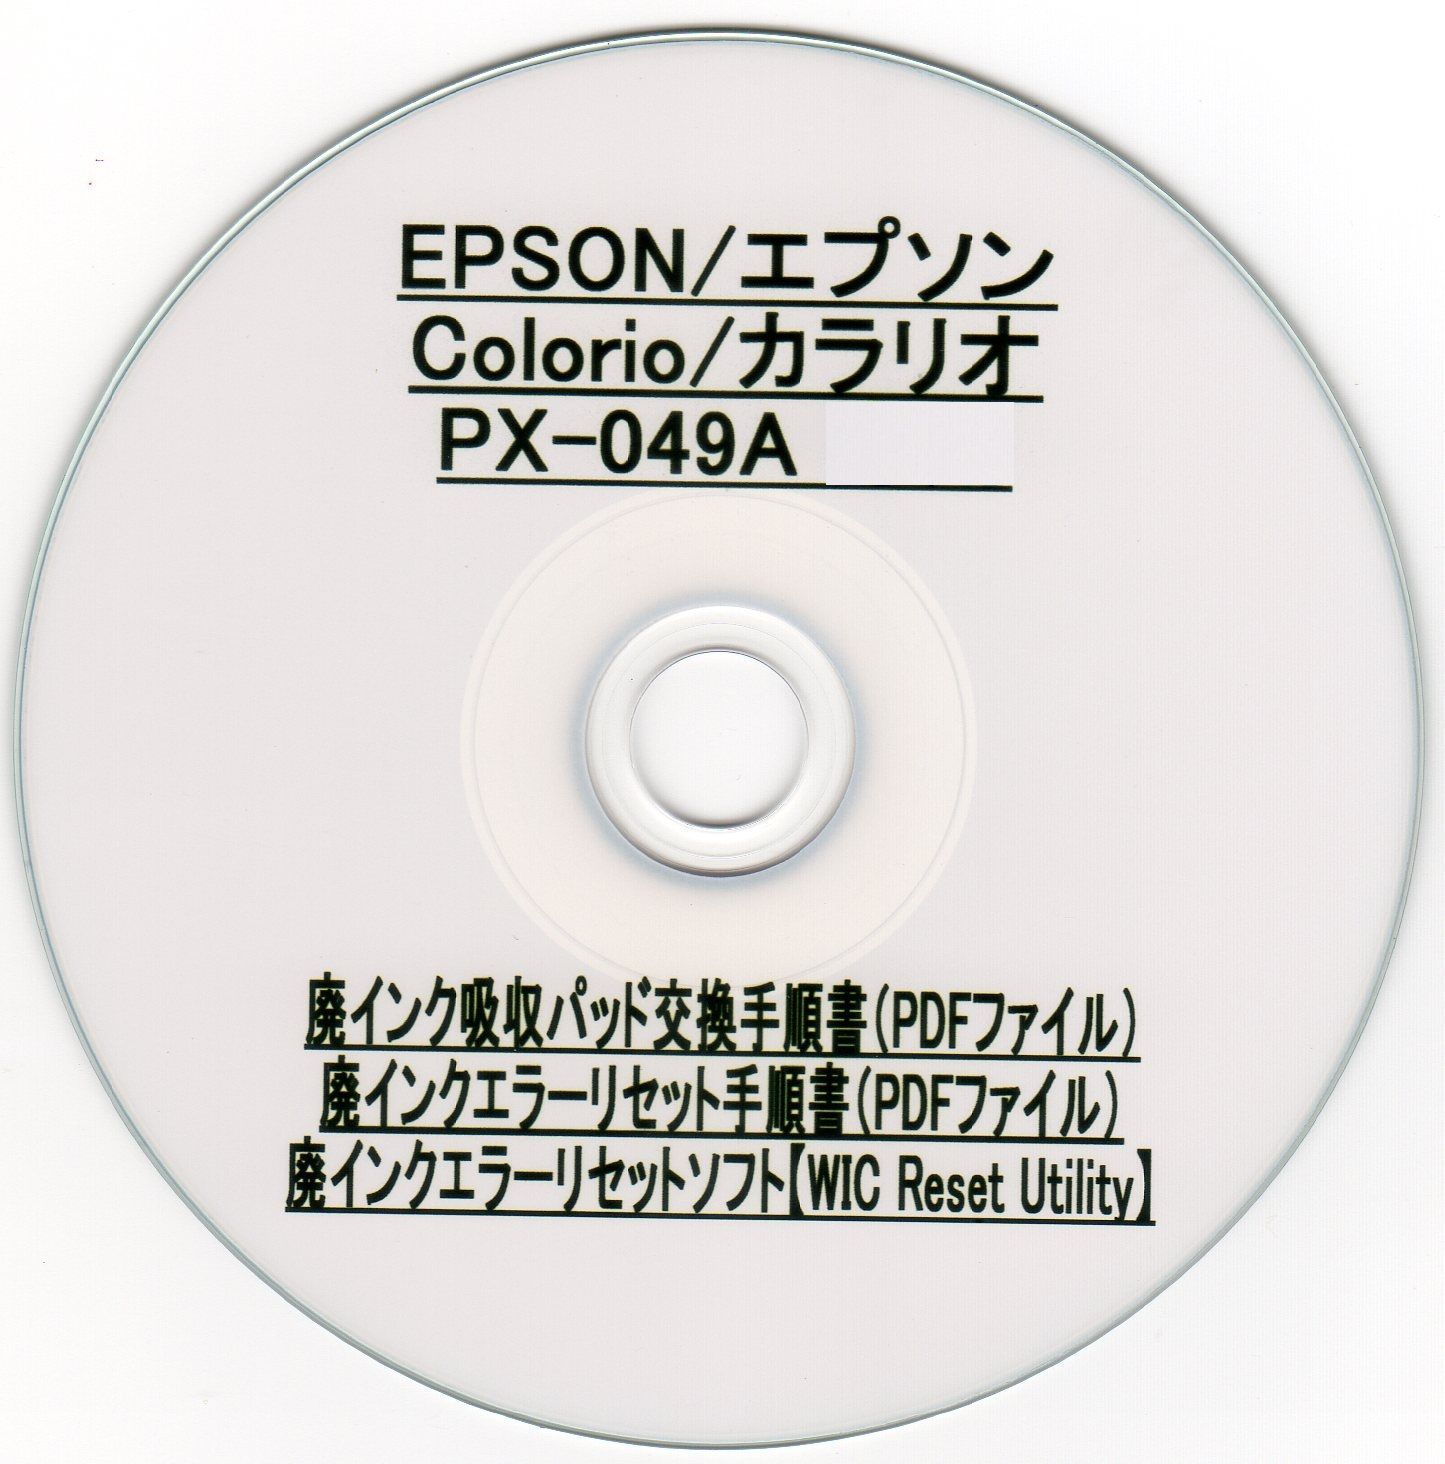  PX-049A 専用 EPSON エプソン ※別途、廃インクエラーリセットキーが必要です。